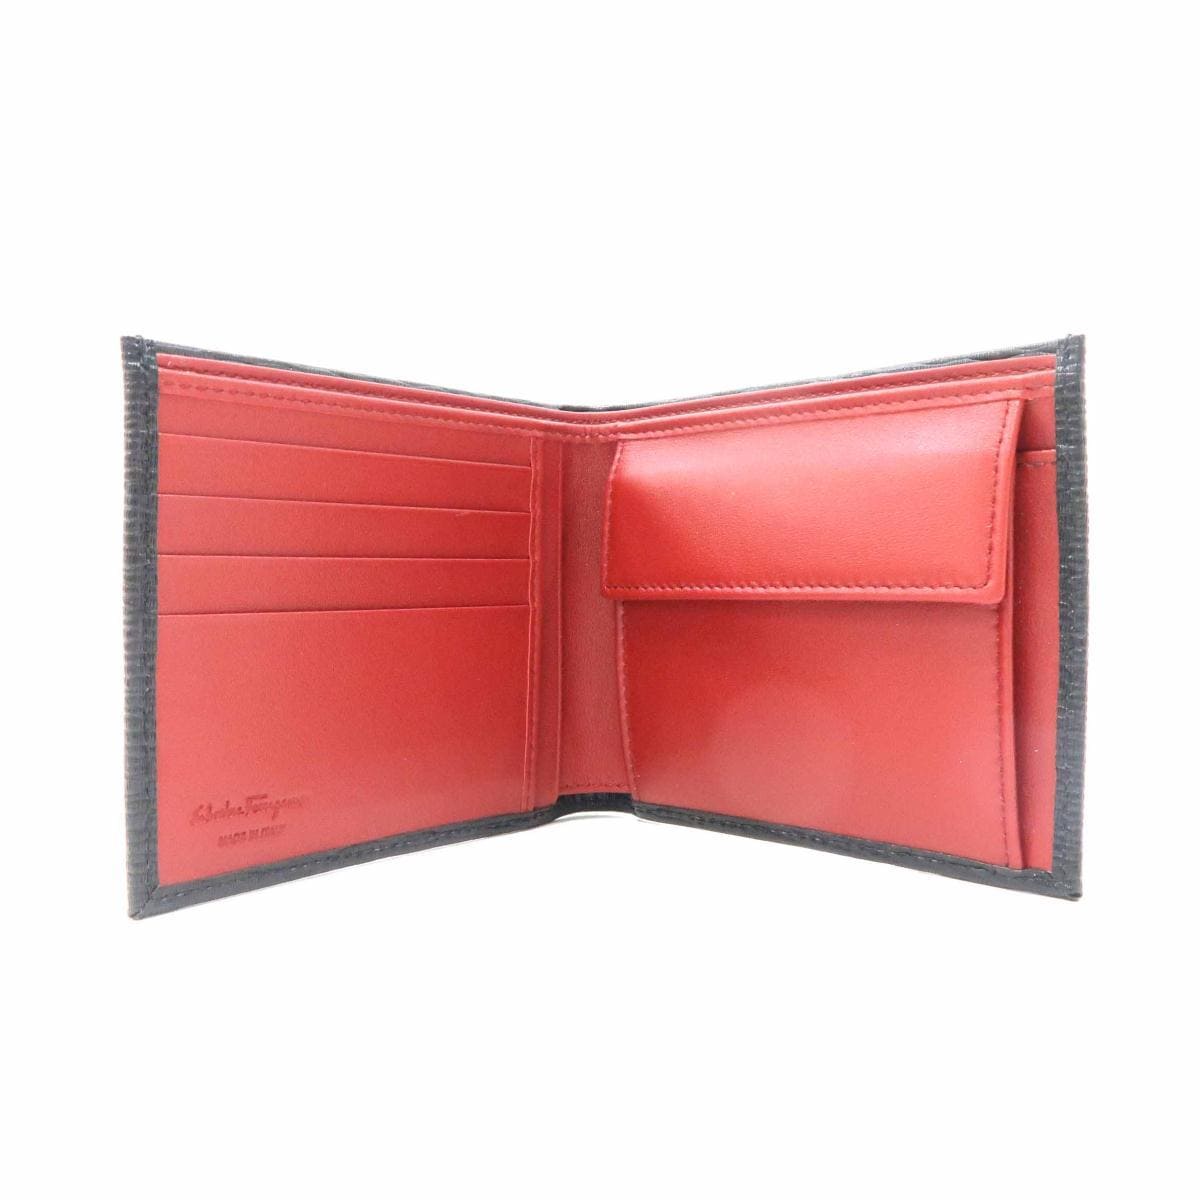 [BRAND NEW] SALVATORE FERRAGAMO wallet 66 A065